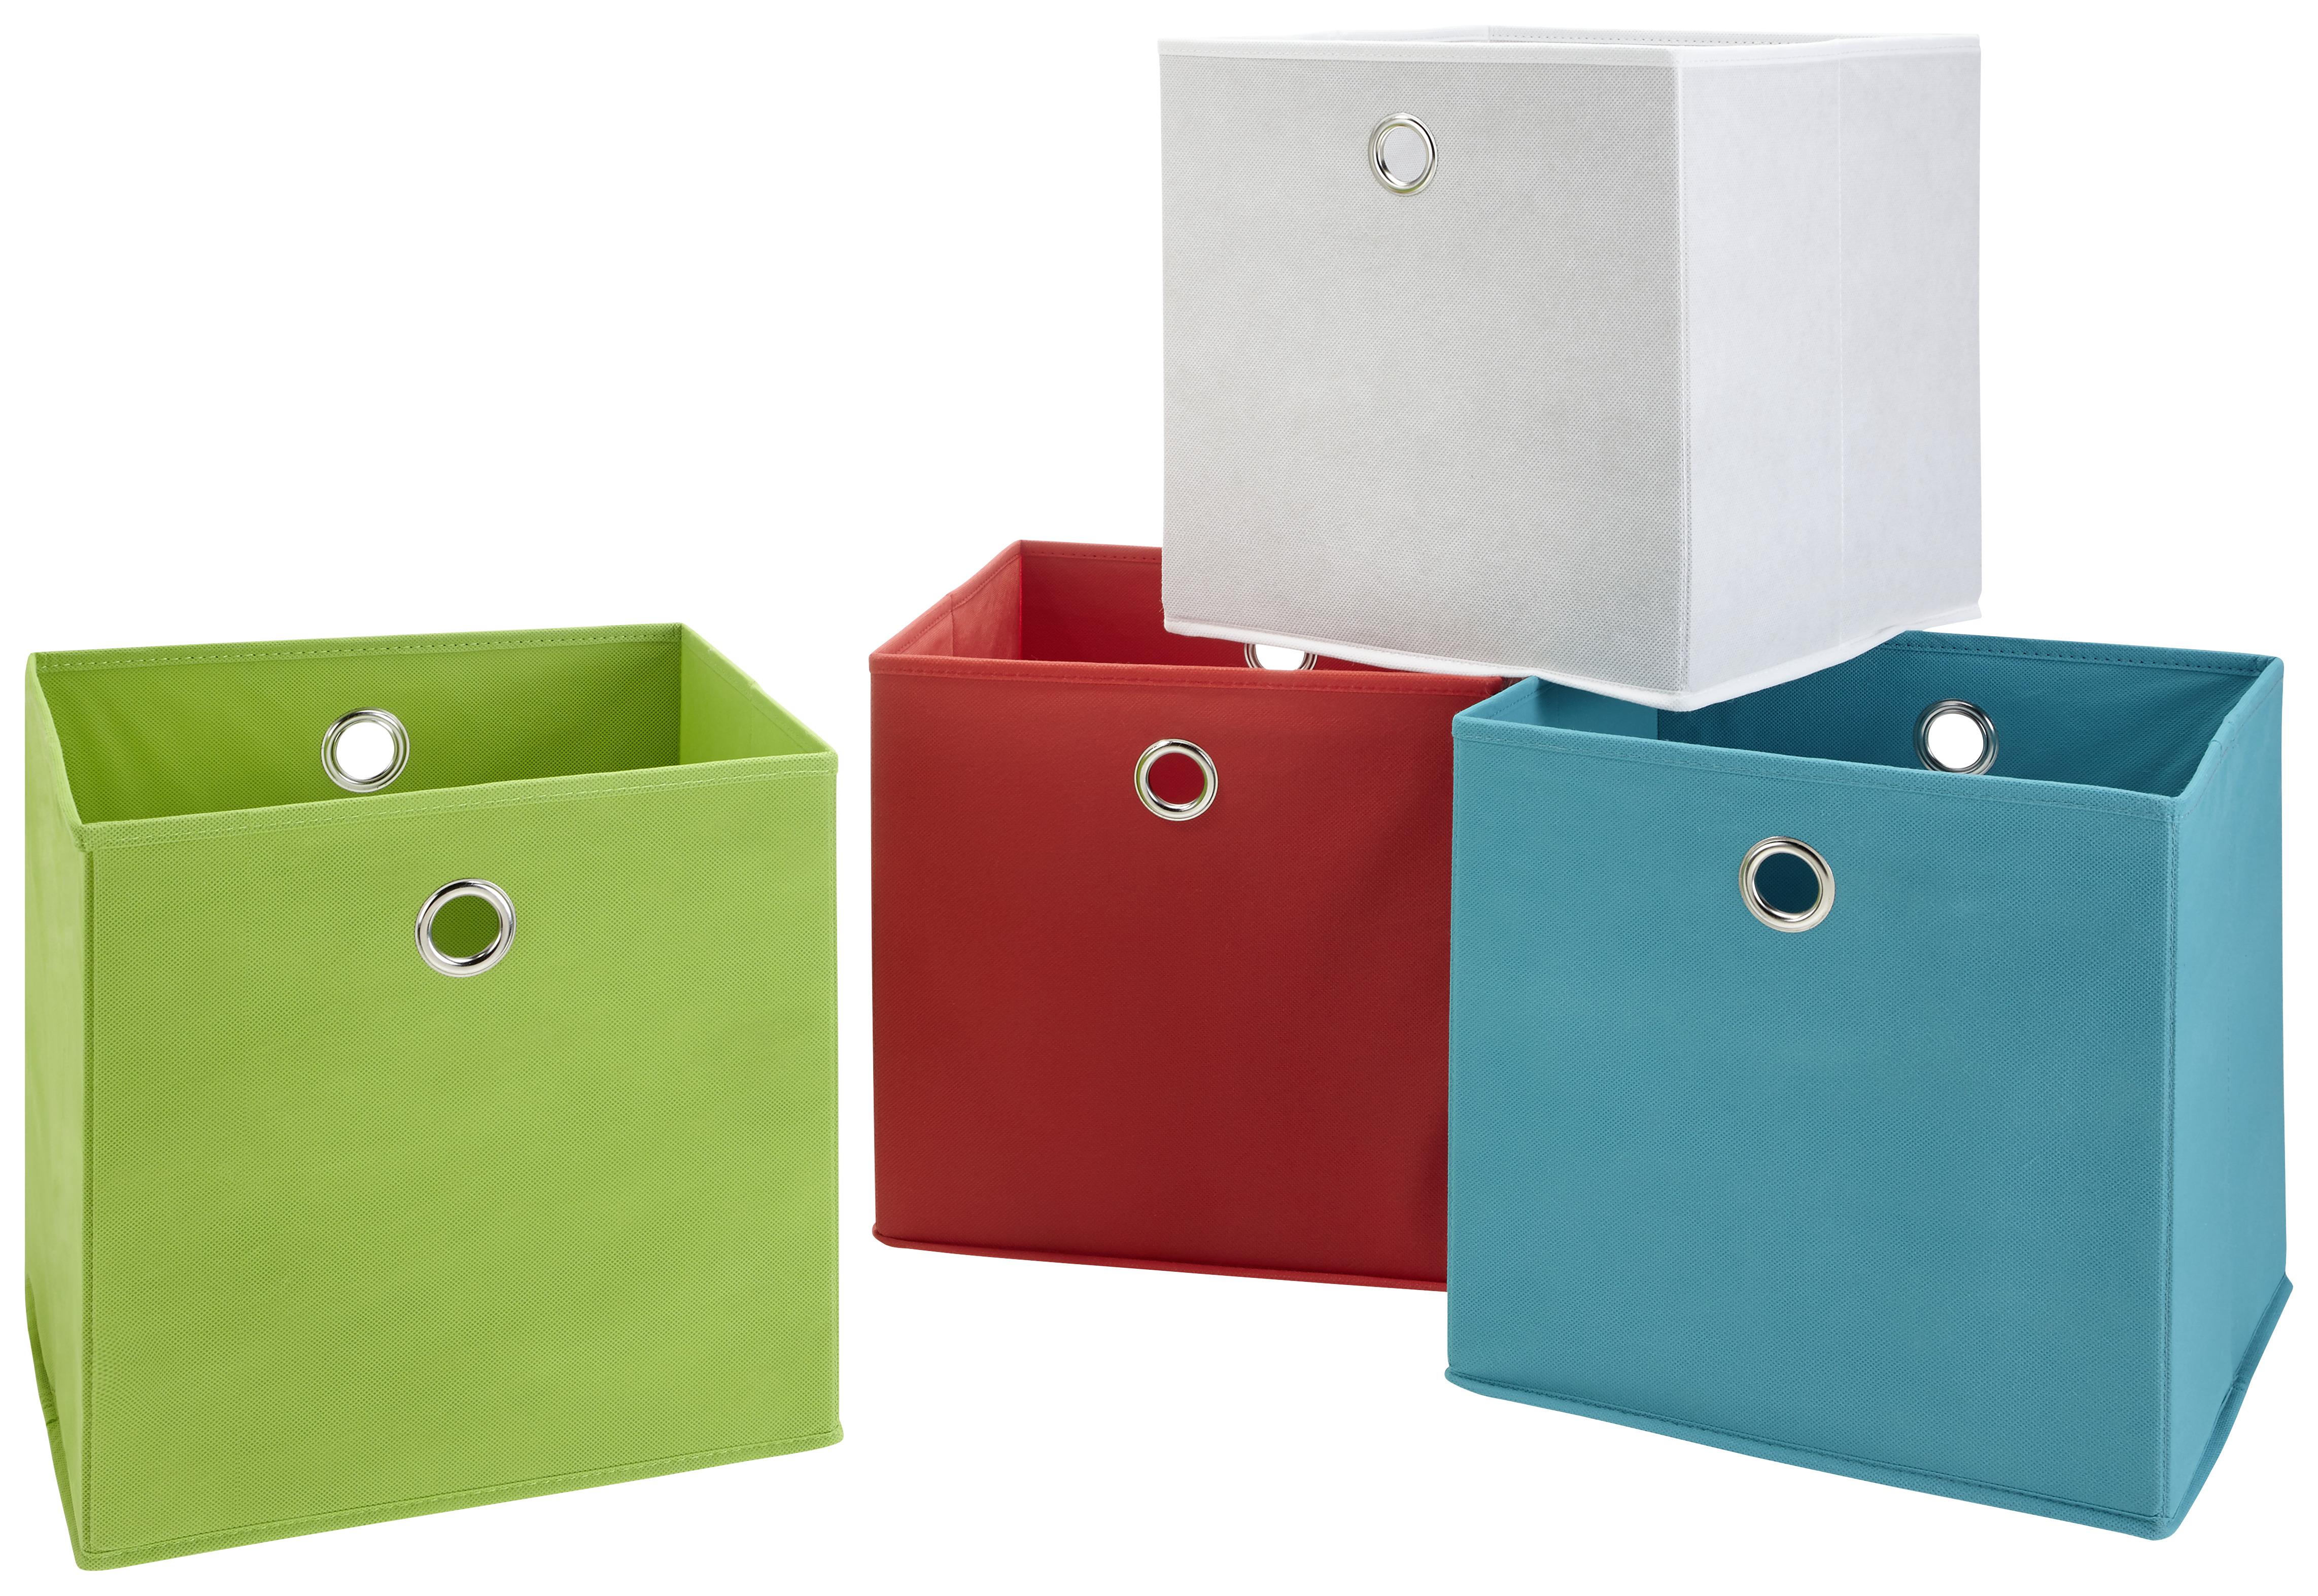 Faltbox Fibi in Weiß - Weiß, MODERN, Karton/Textil (30/30/30cm) - Modern Living